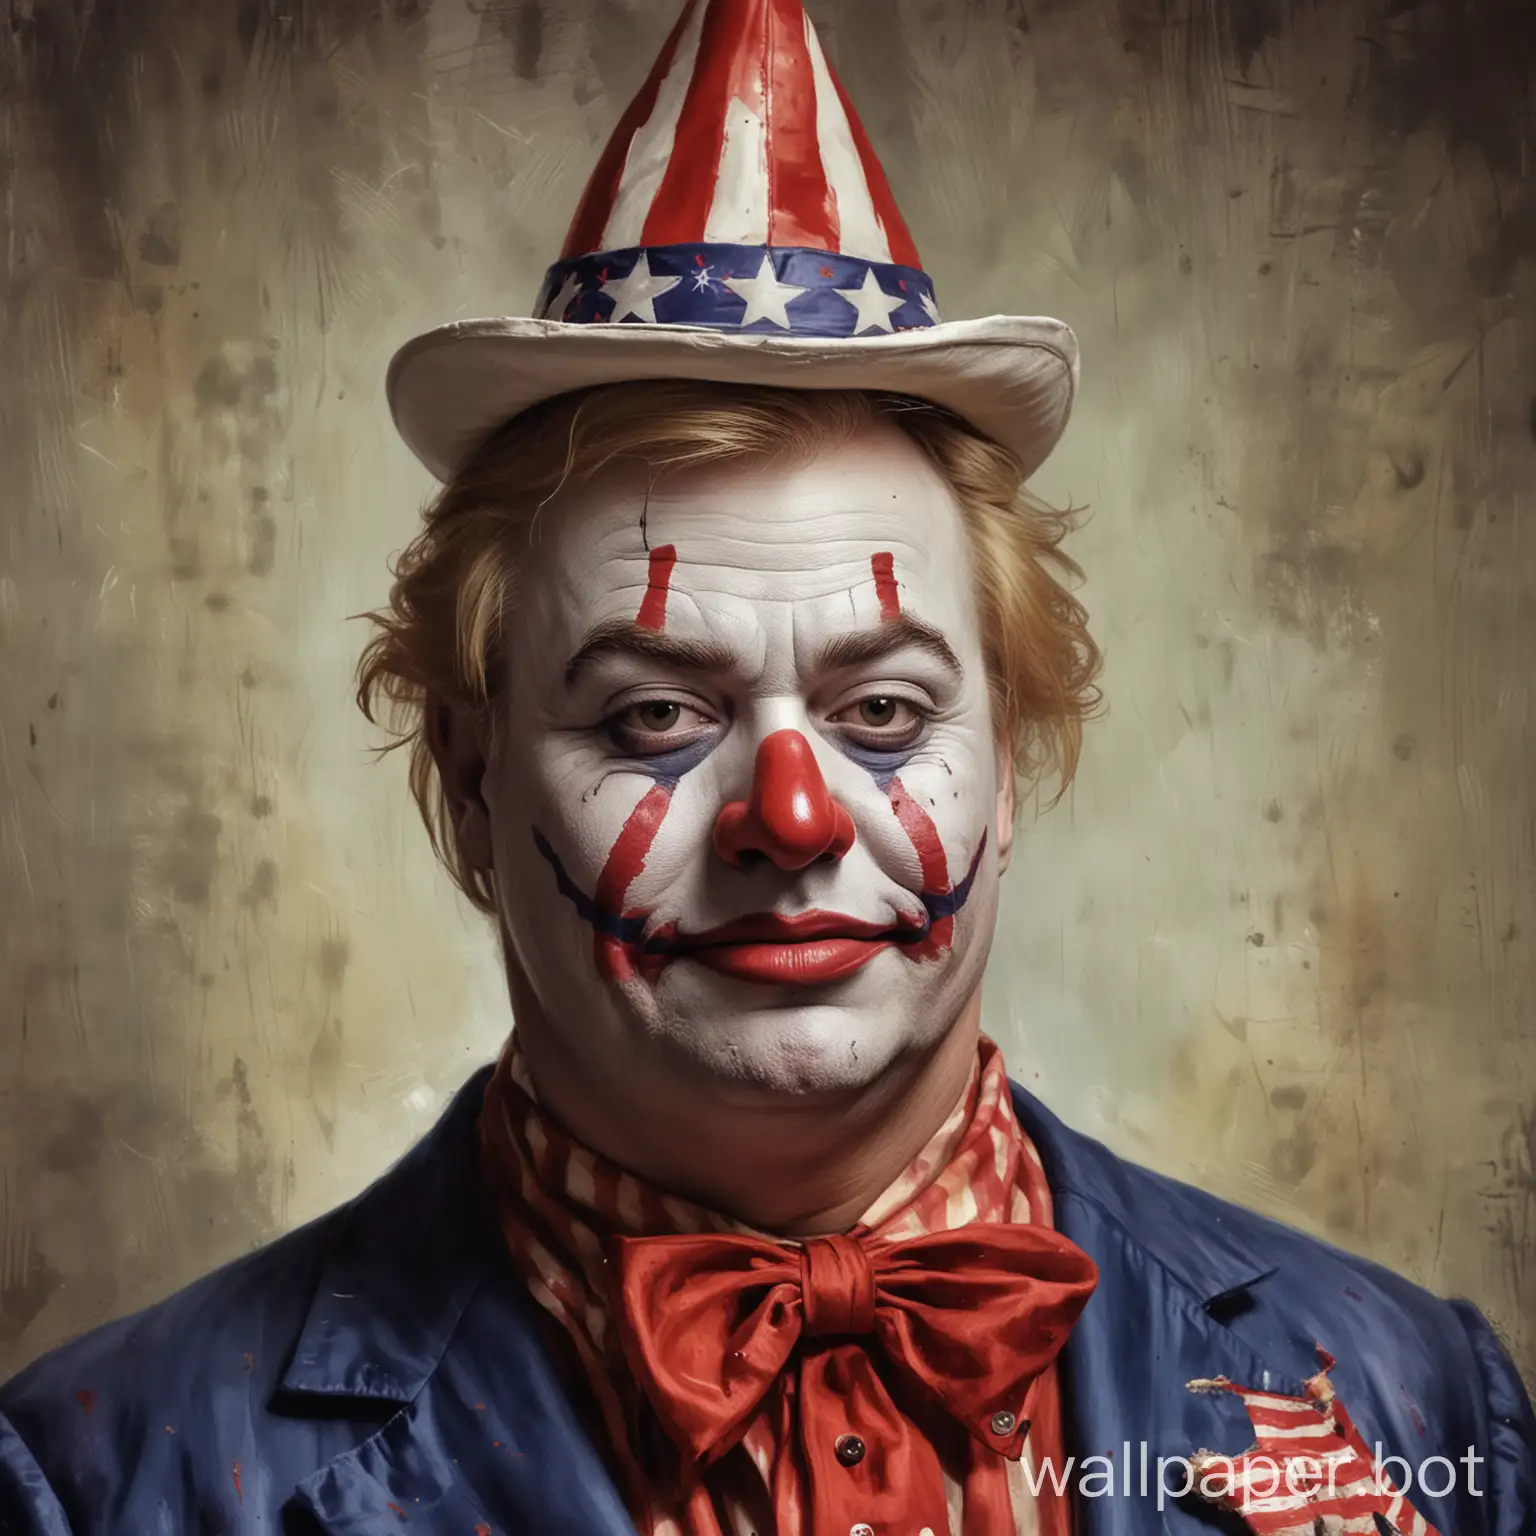 Trump-Impersonator-Portraying-John-Wayne-Gacy-Clown-Character